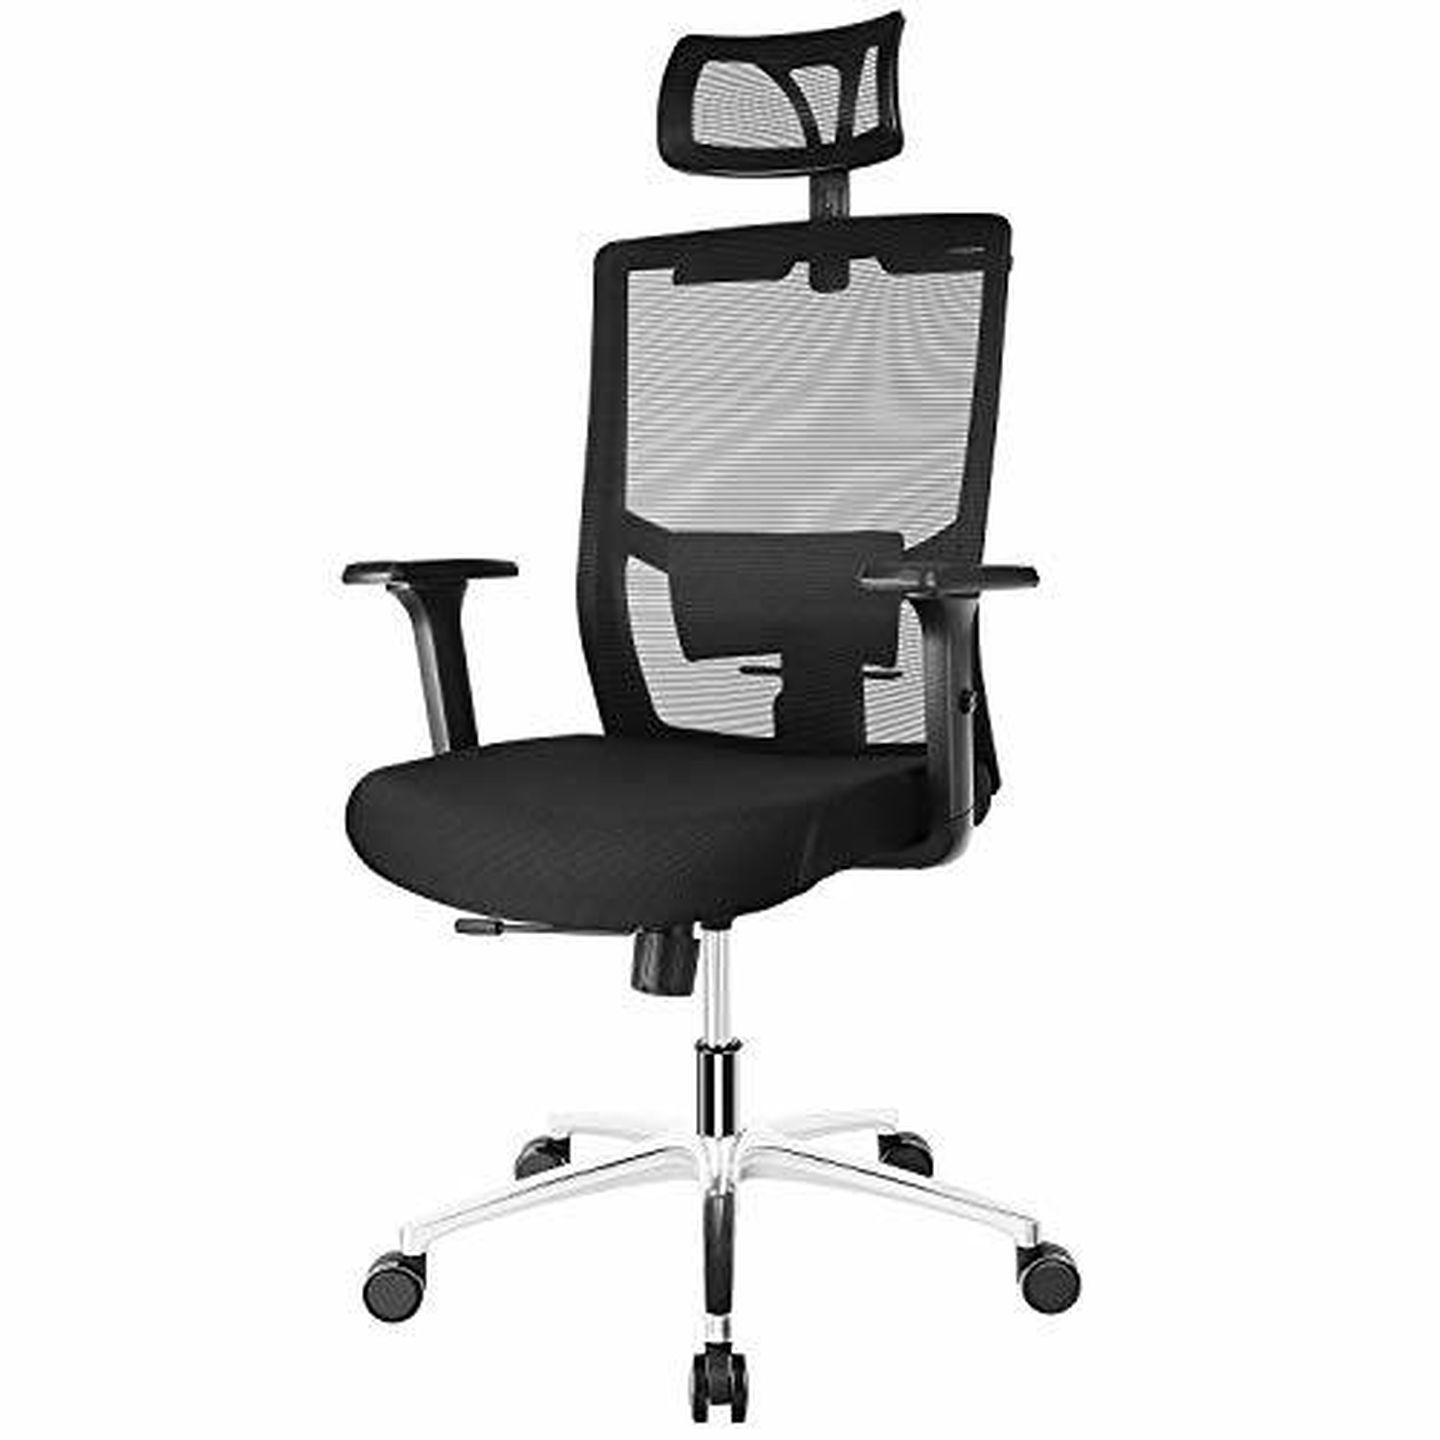 Silla ergonómica para el hogar, sillas de oficina grandes ajustables con  soporte lumbar, respaldo de malla transpirable con reposacabezas ajustable